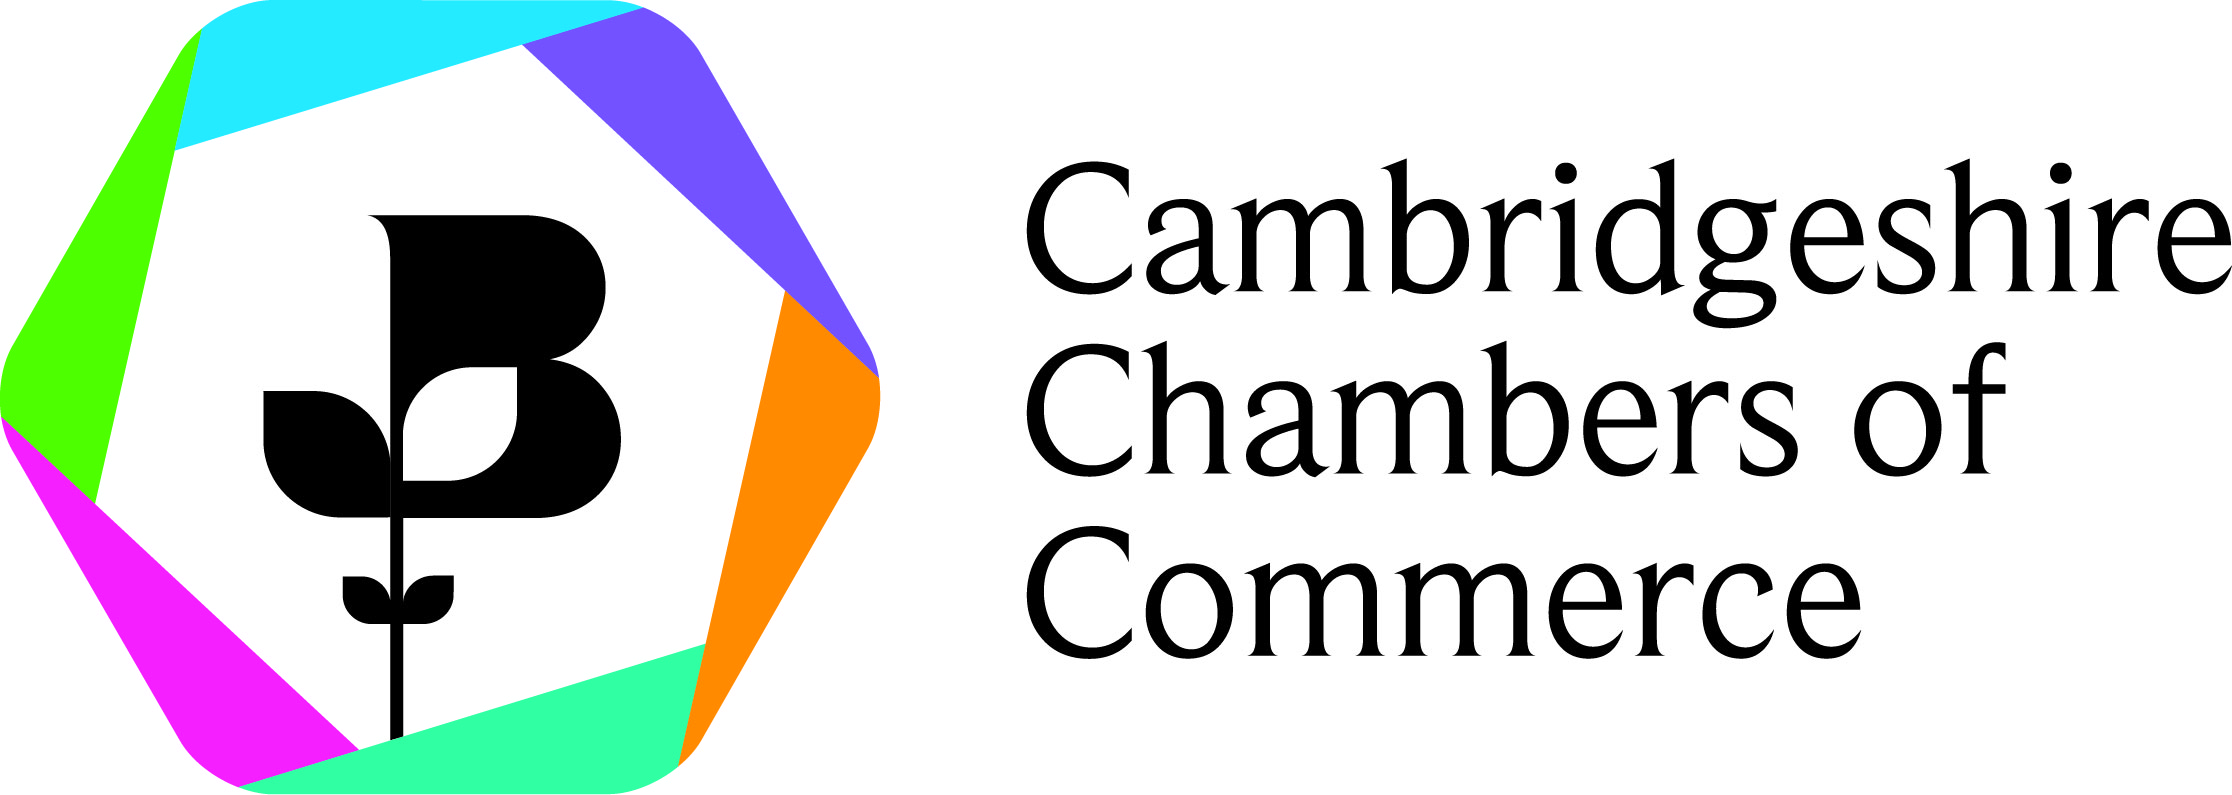 Cambridgeshire Chamber of Commerce